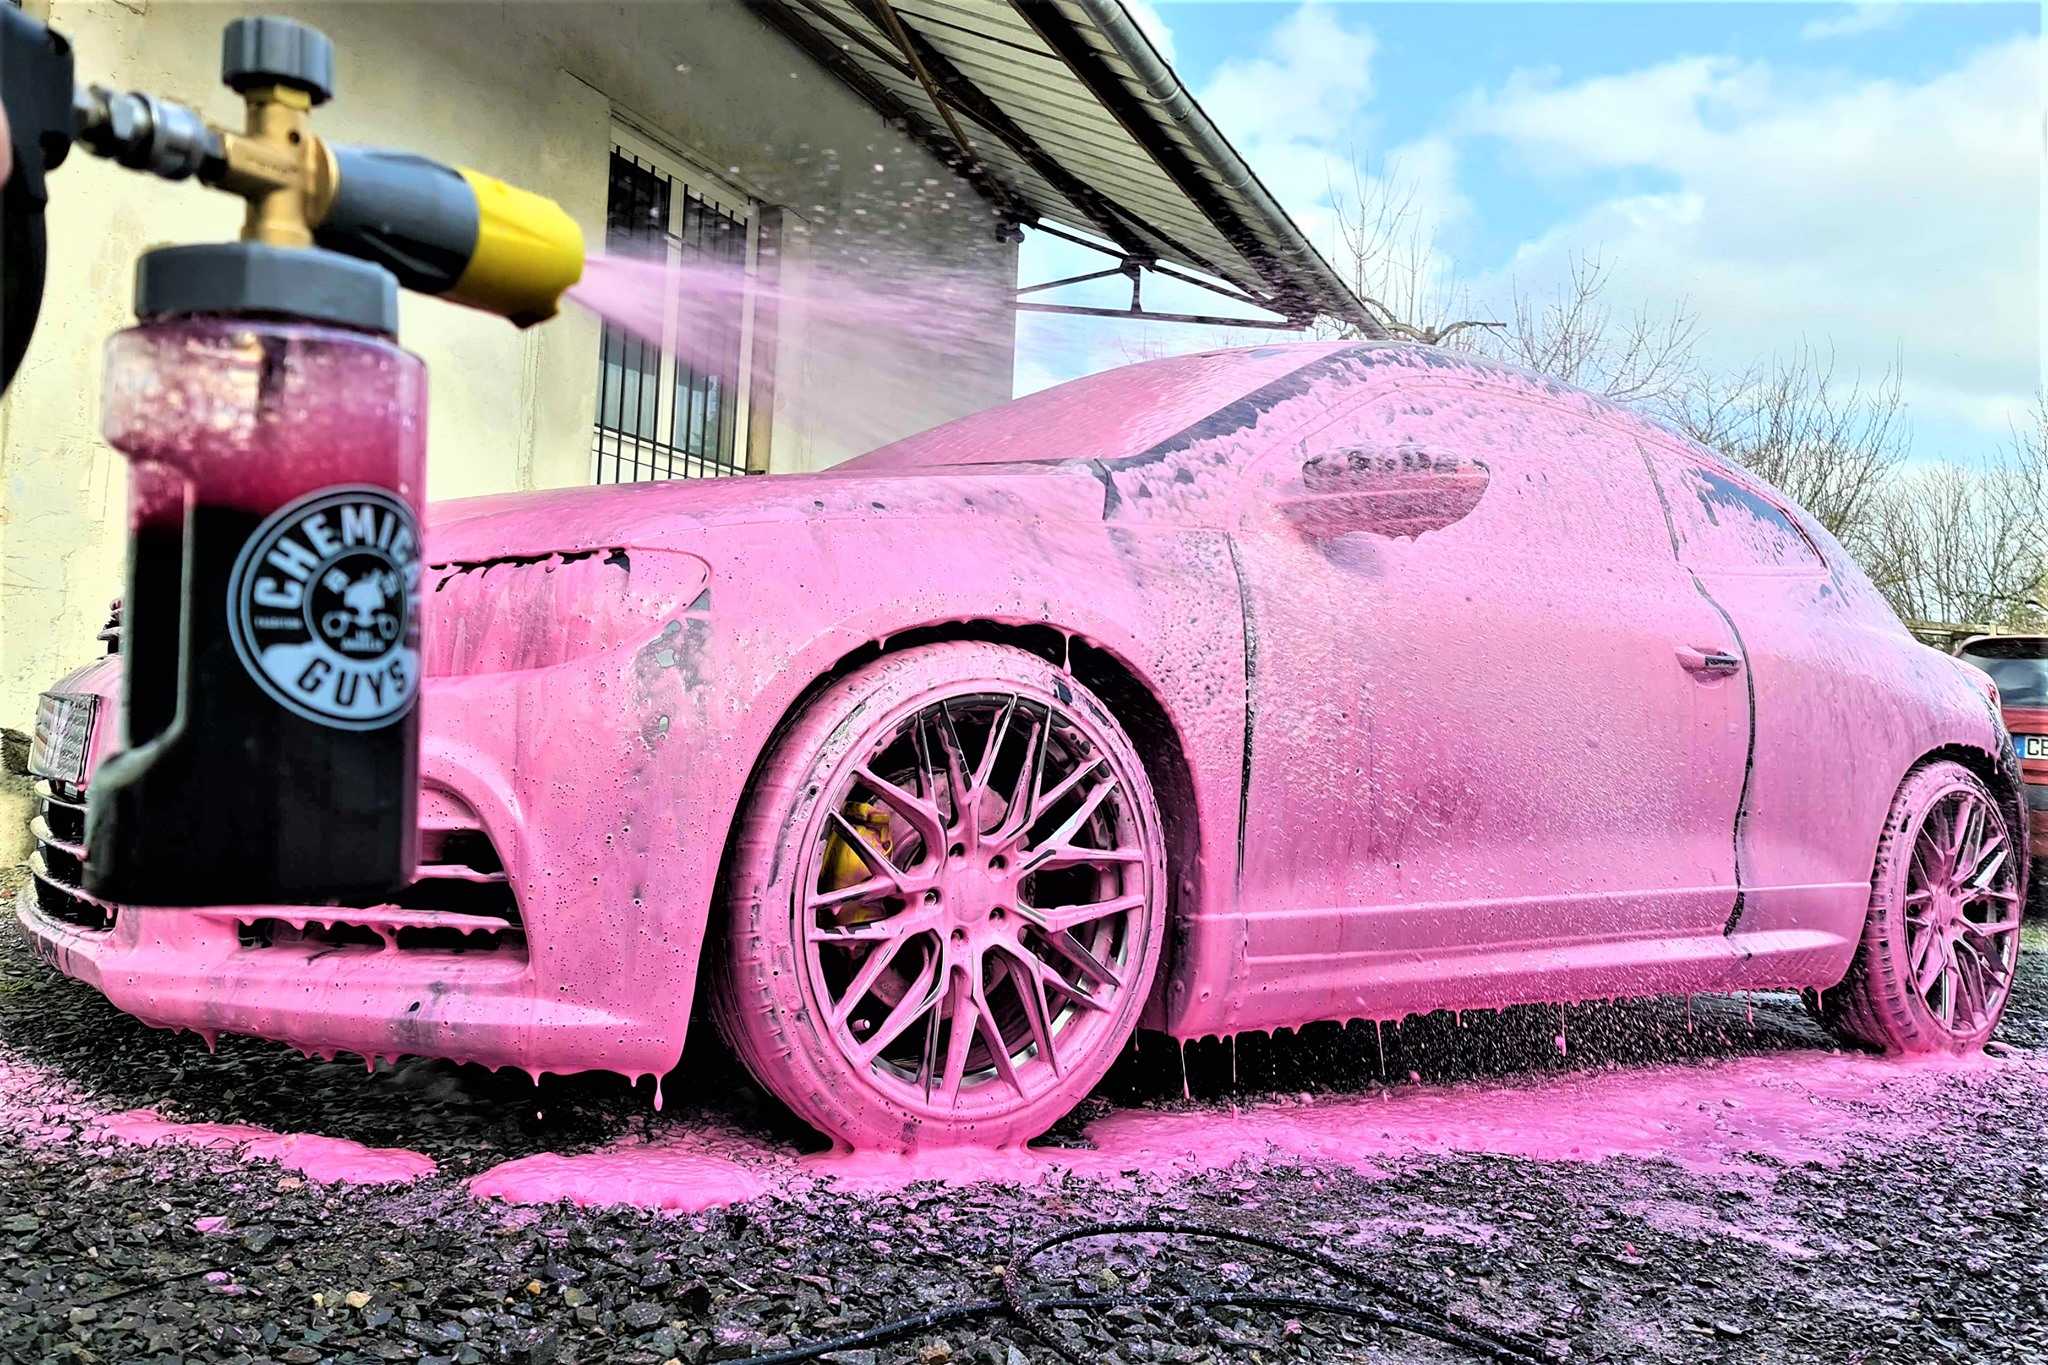 vw-scirocco-lavage-detailing-chemicalguys-shinygarage-pink-foam-6165d1e56c337